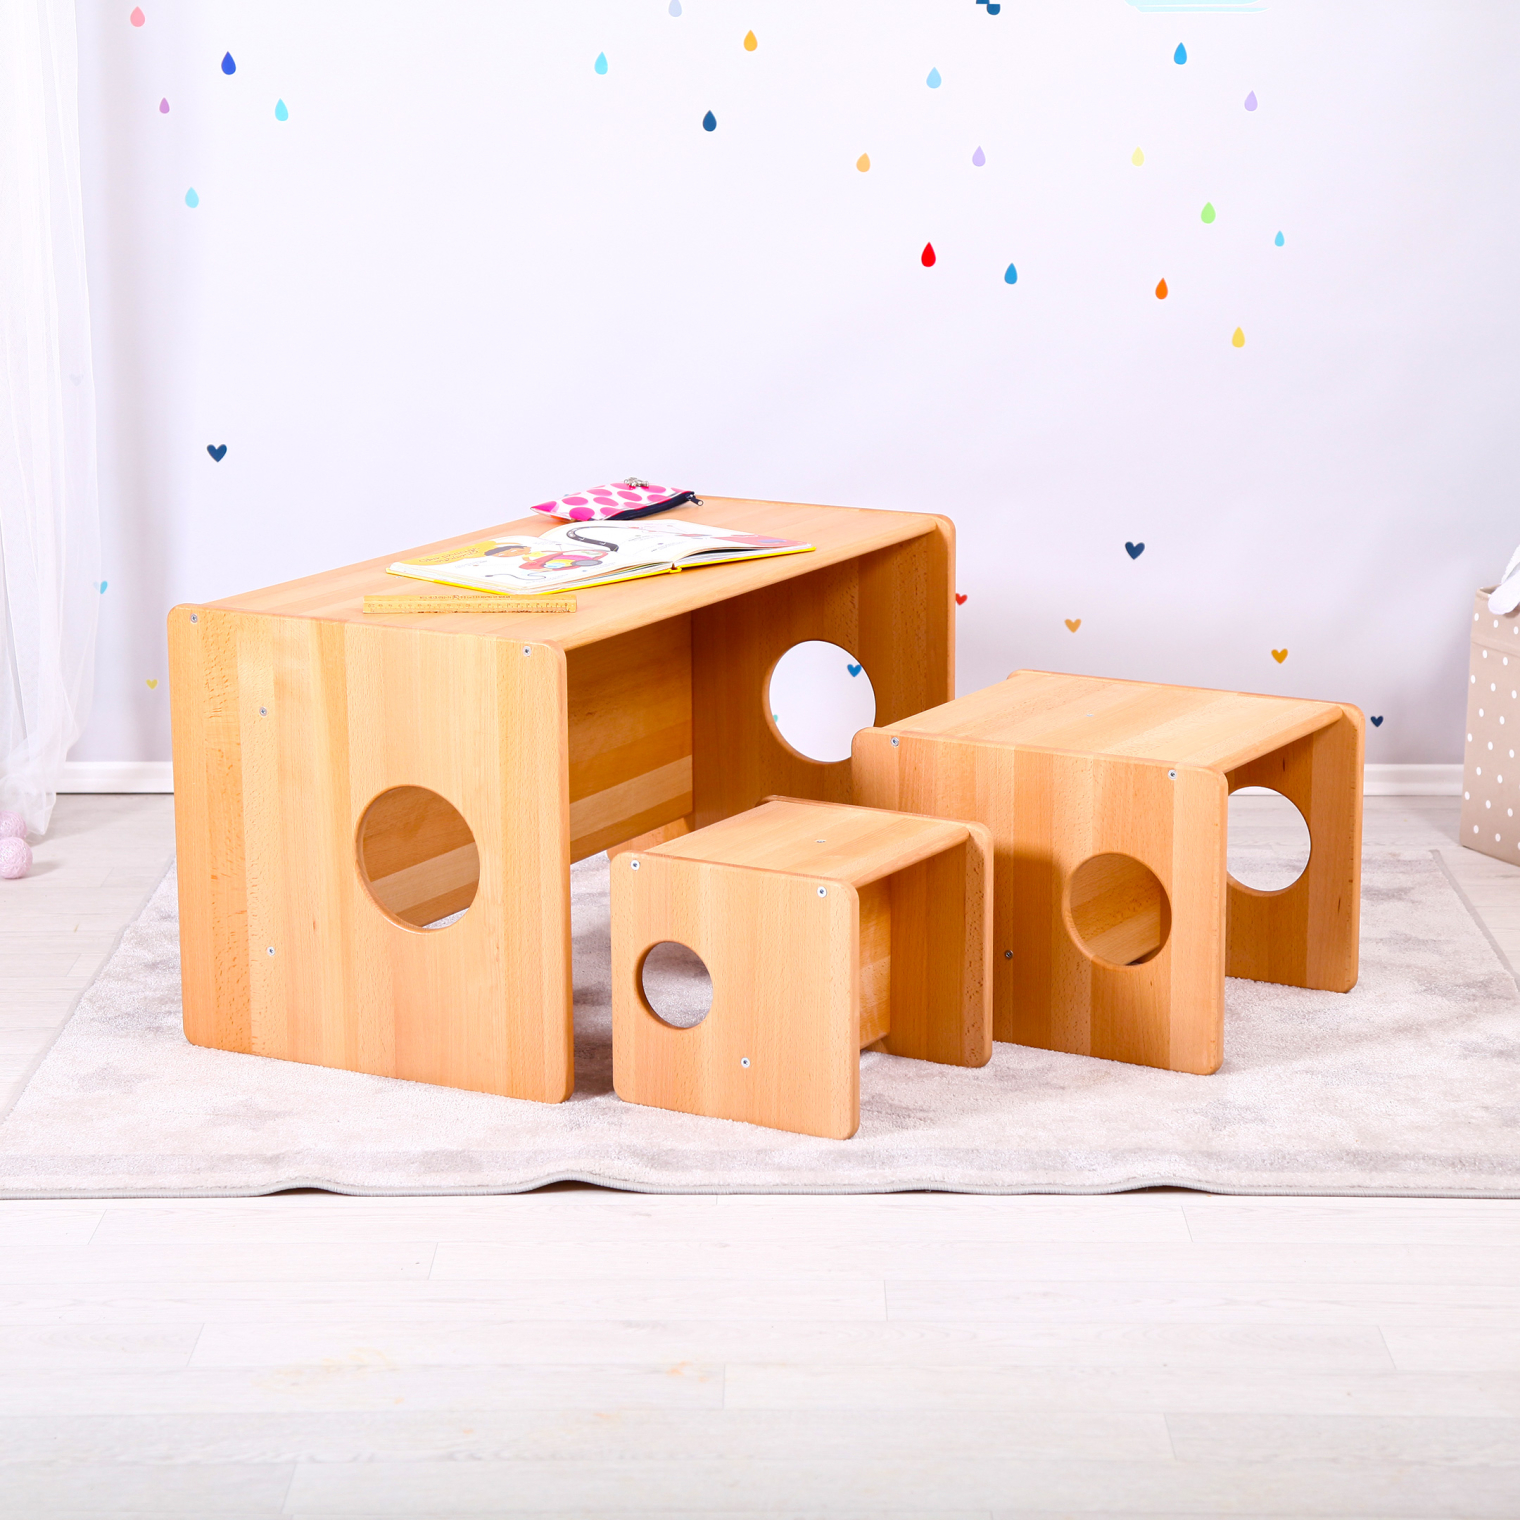 Montessori cUbe chairs 1+2+3